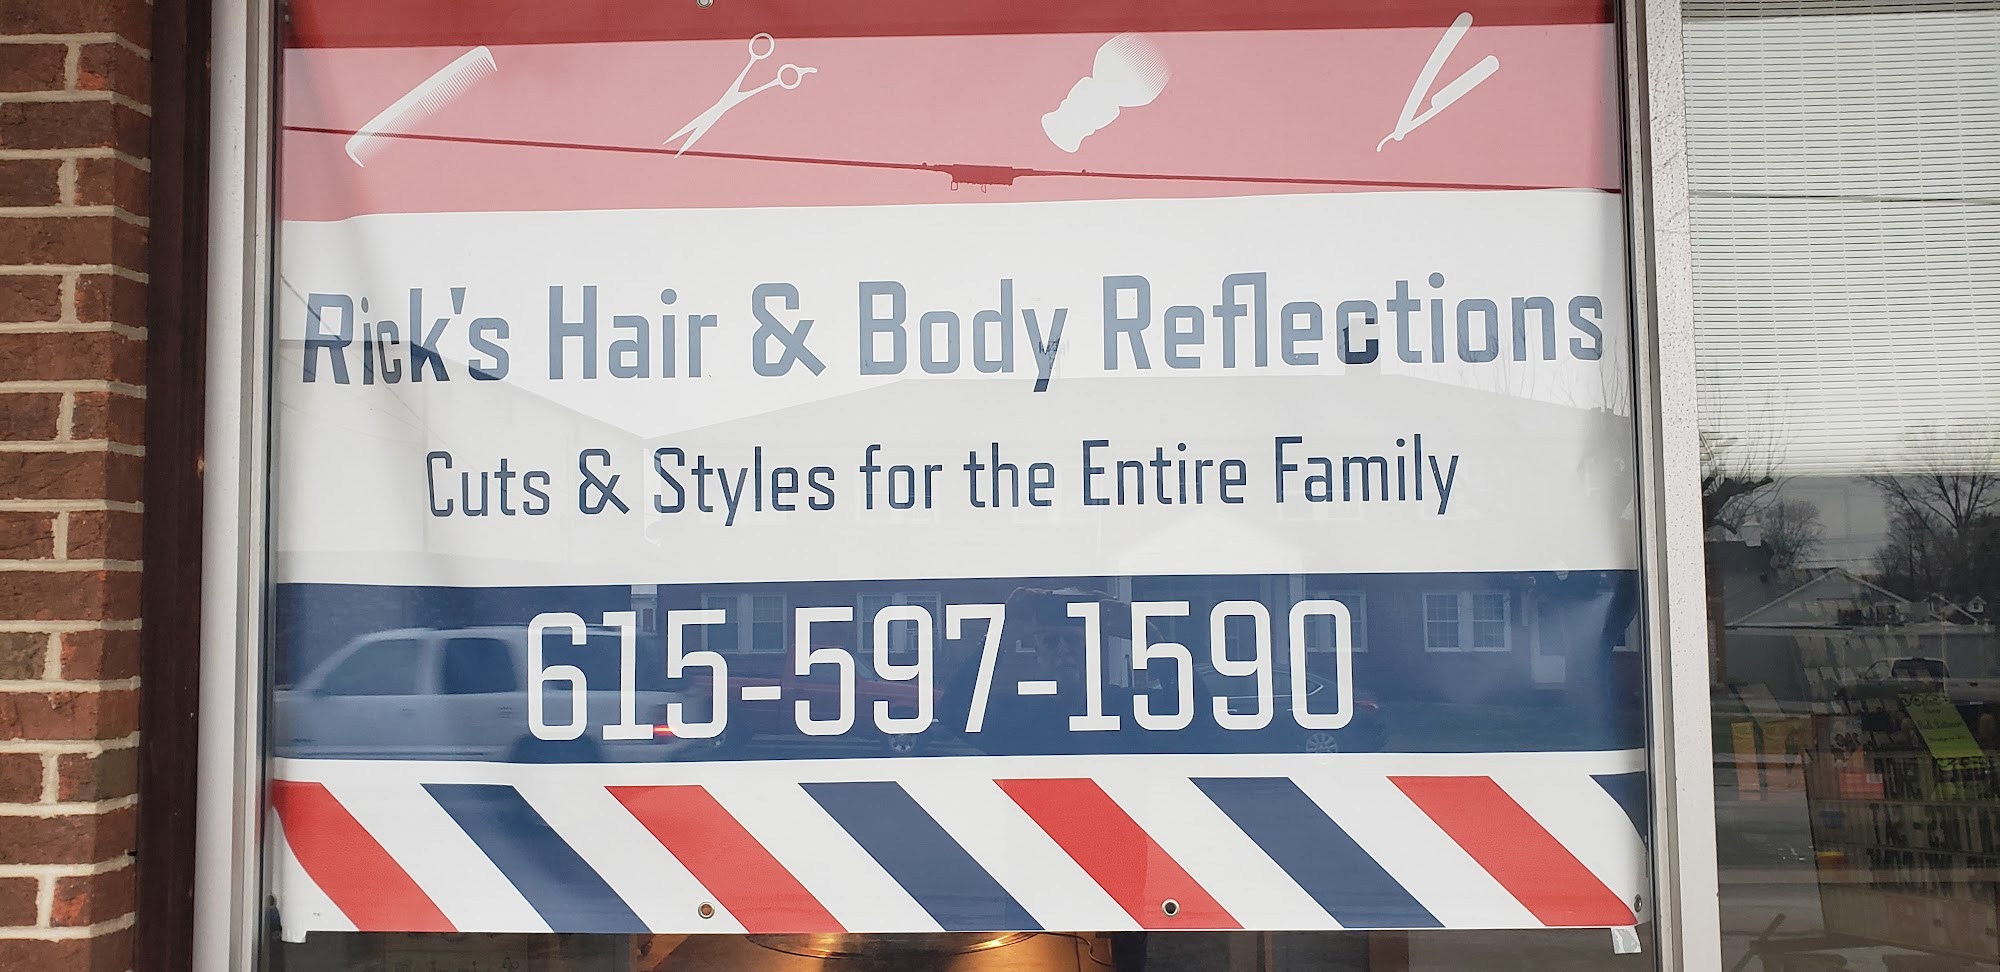 Rick's Hair & Body Reflections